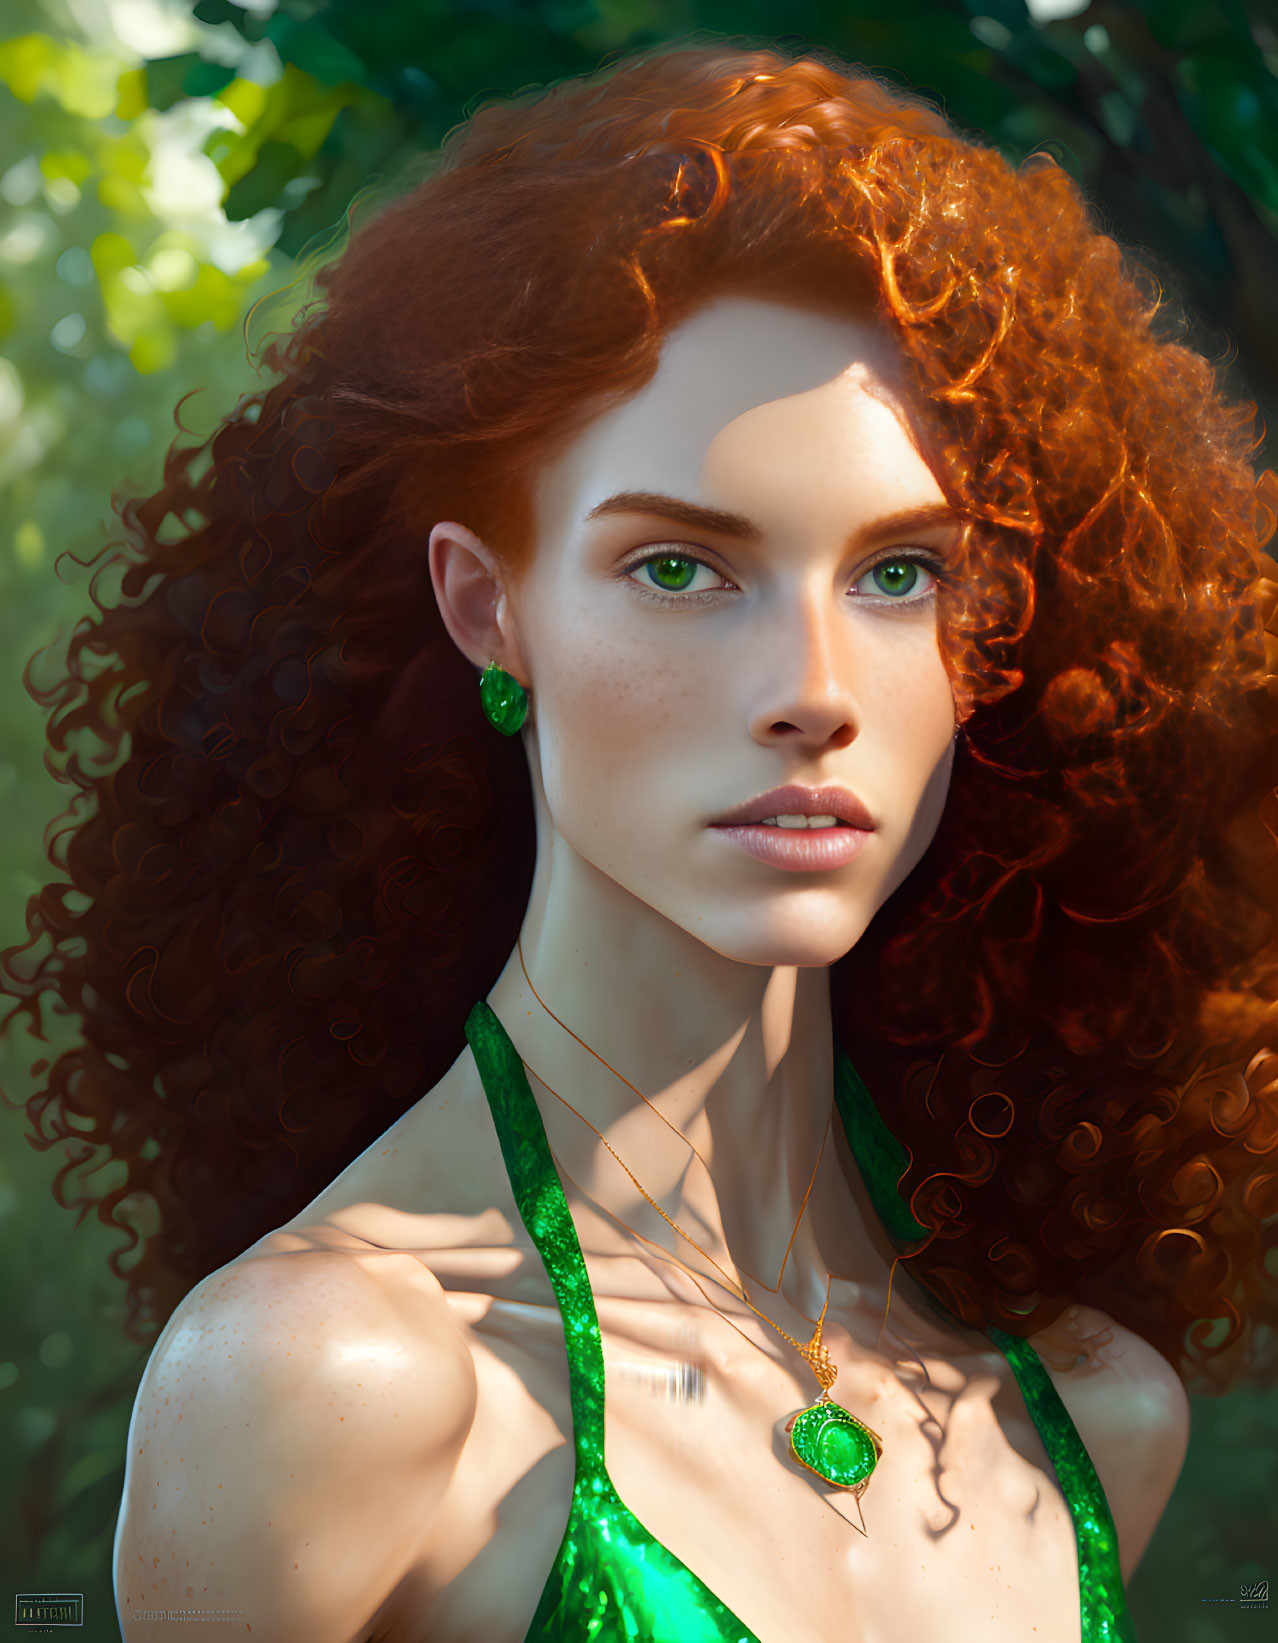 Ginger woman wearing green